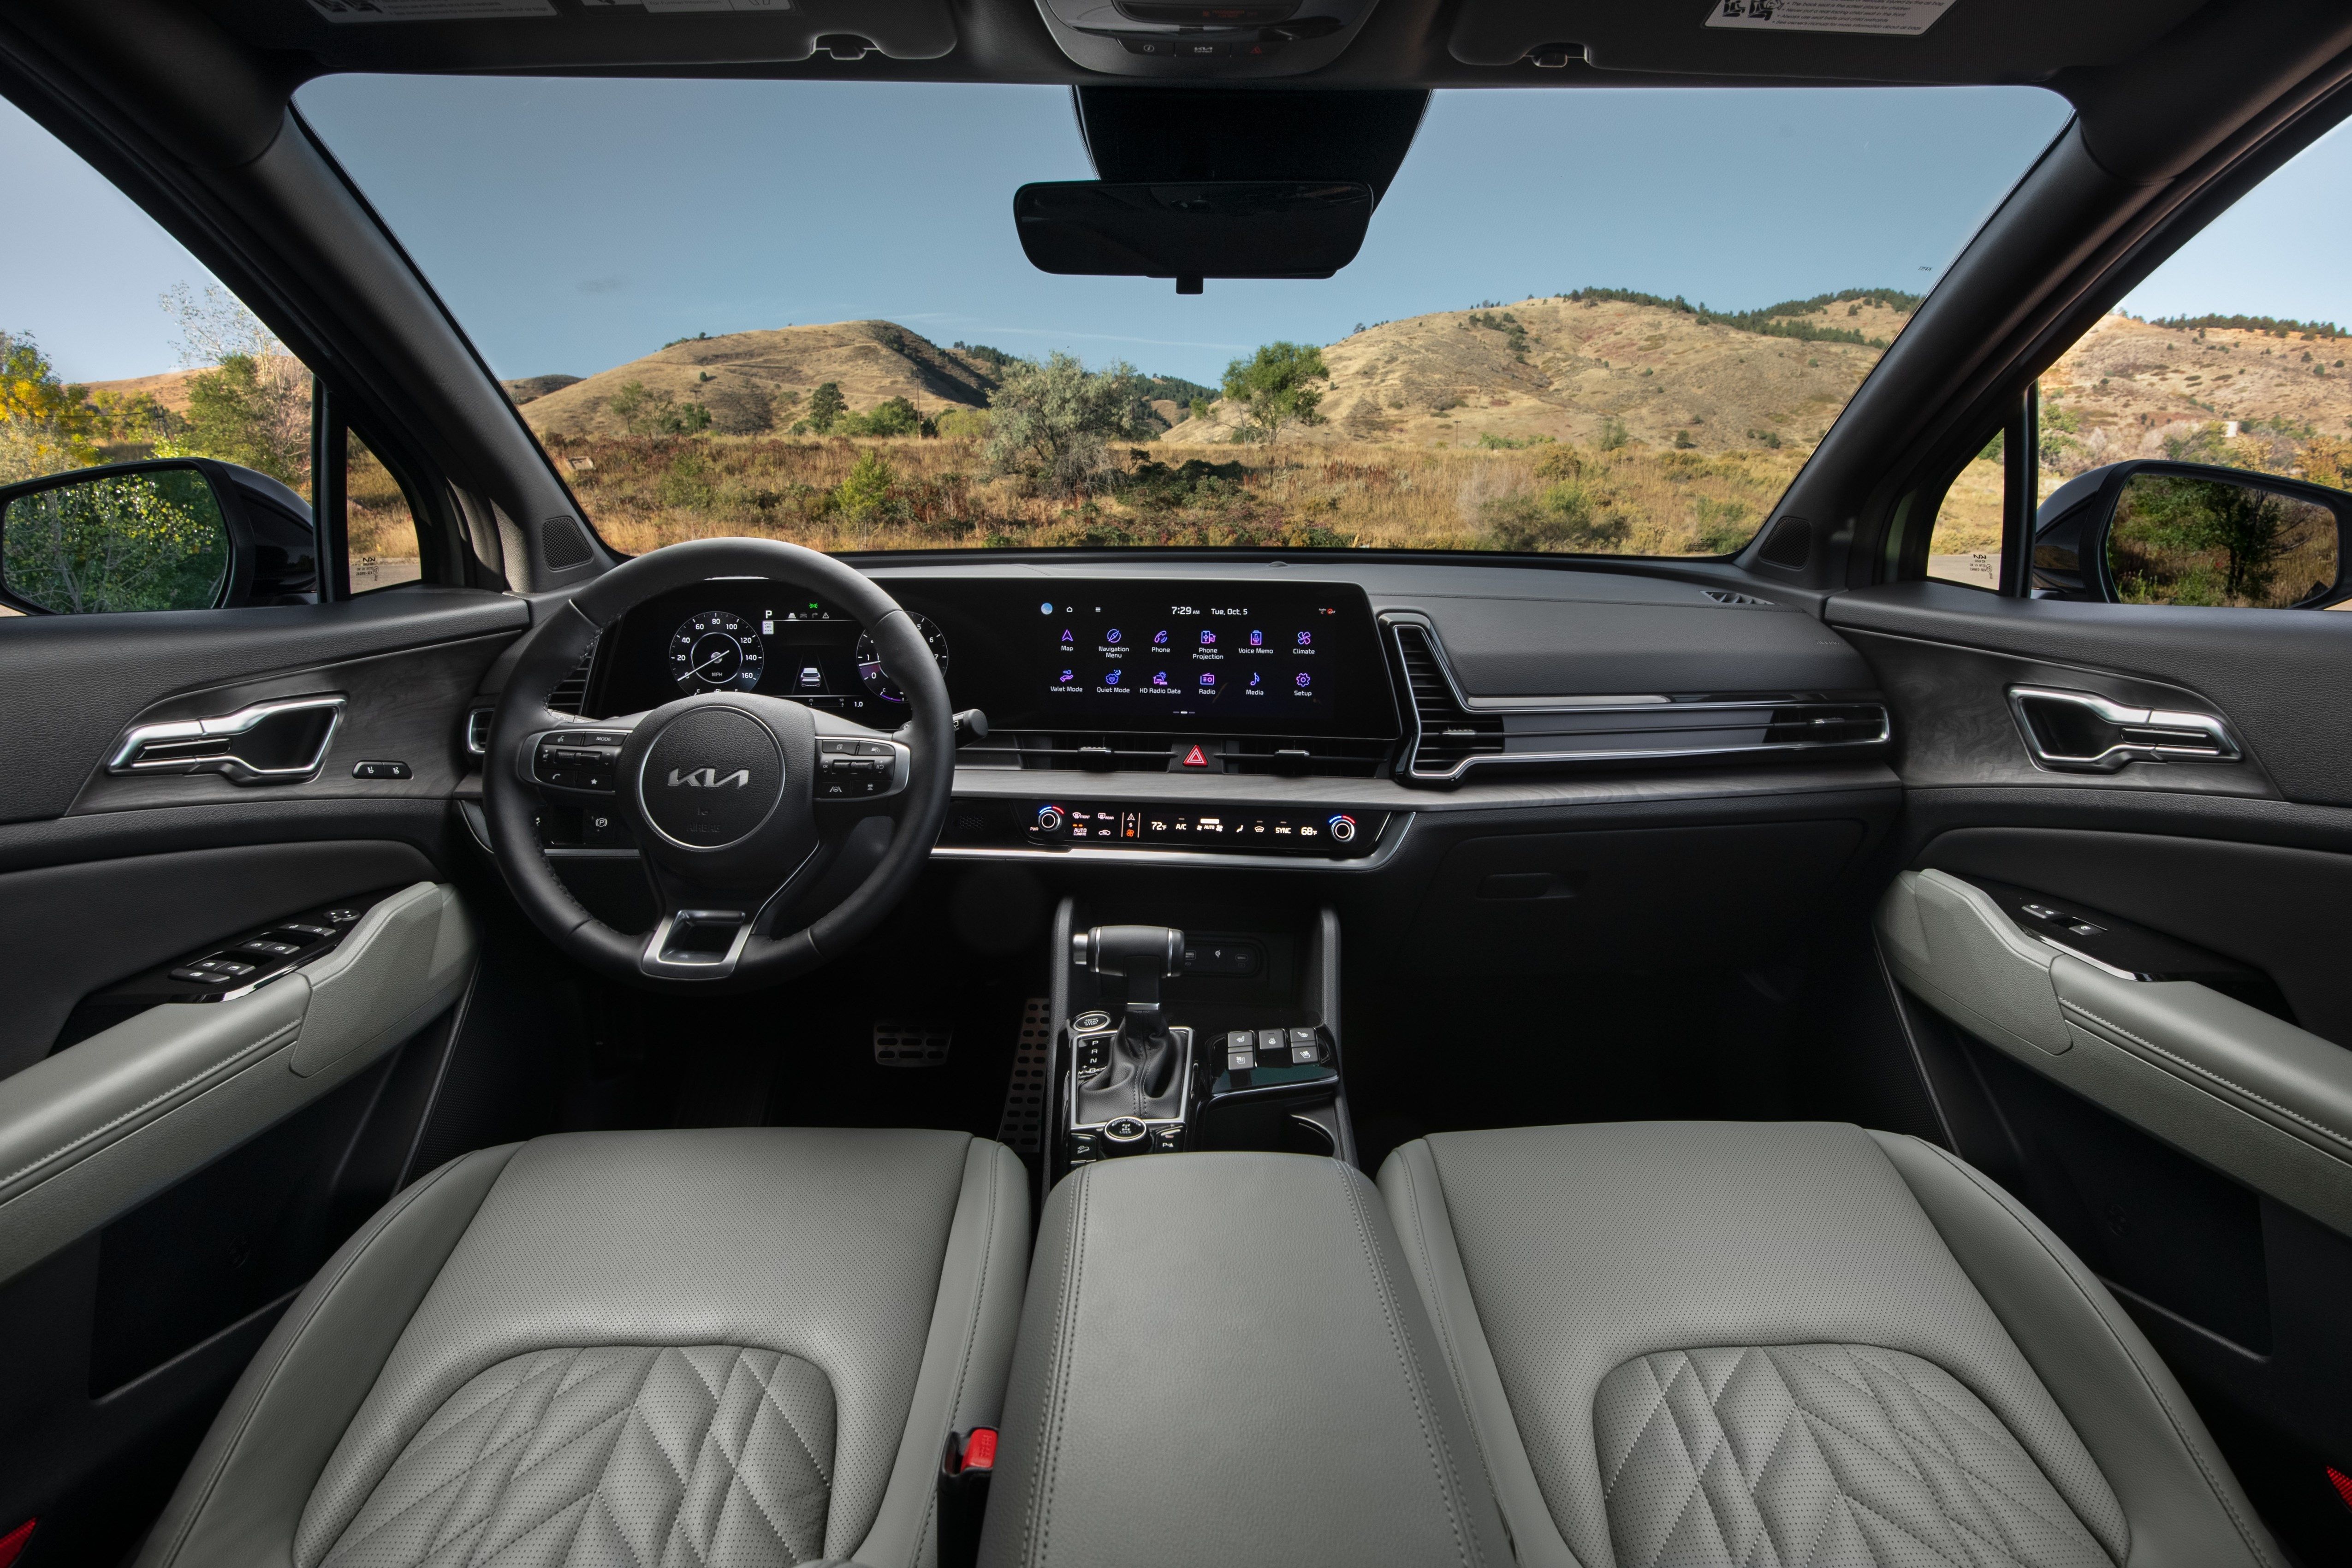 2019 Kia Sportage Interior Features & Dimensions